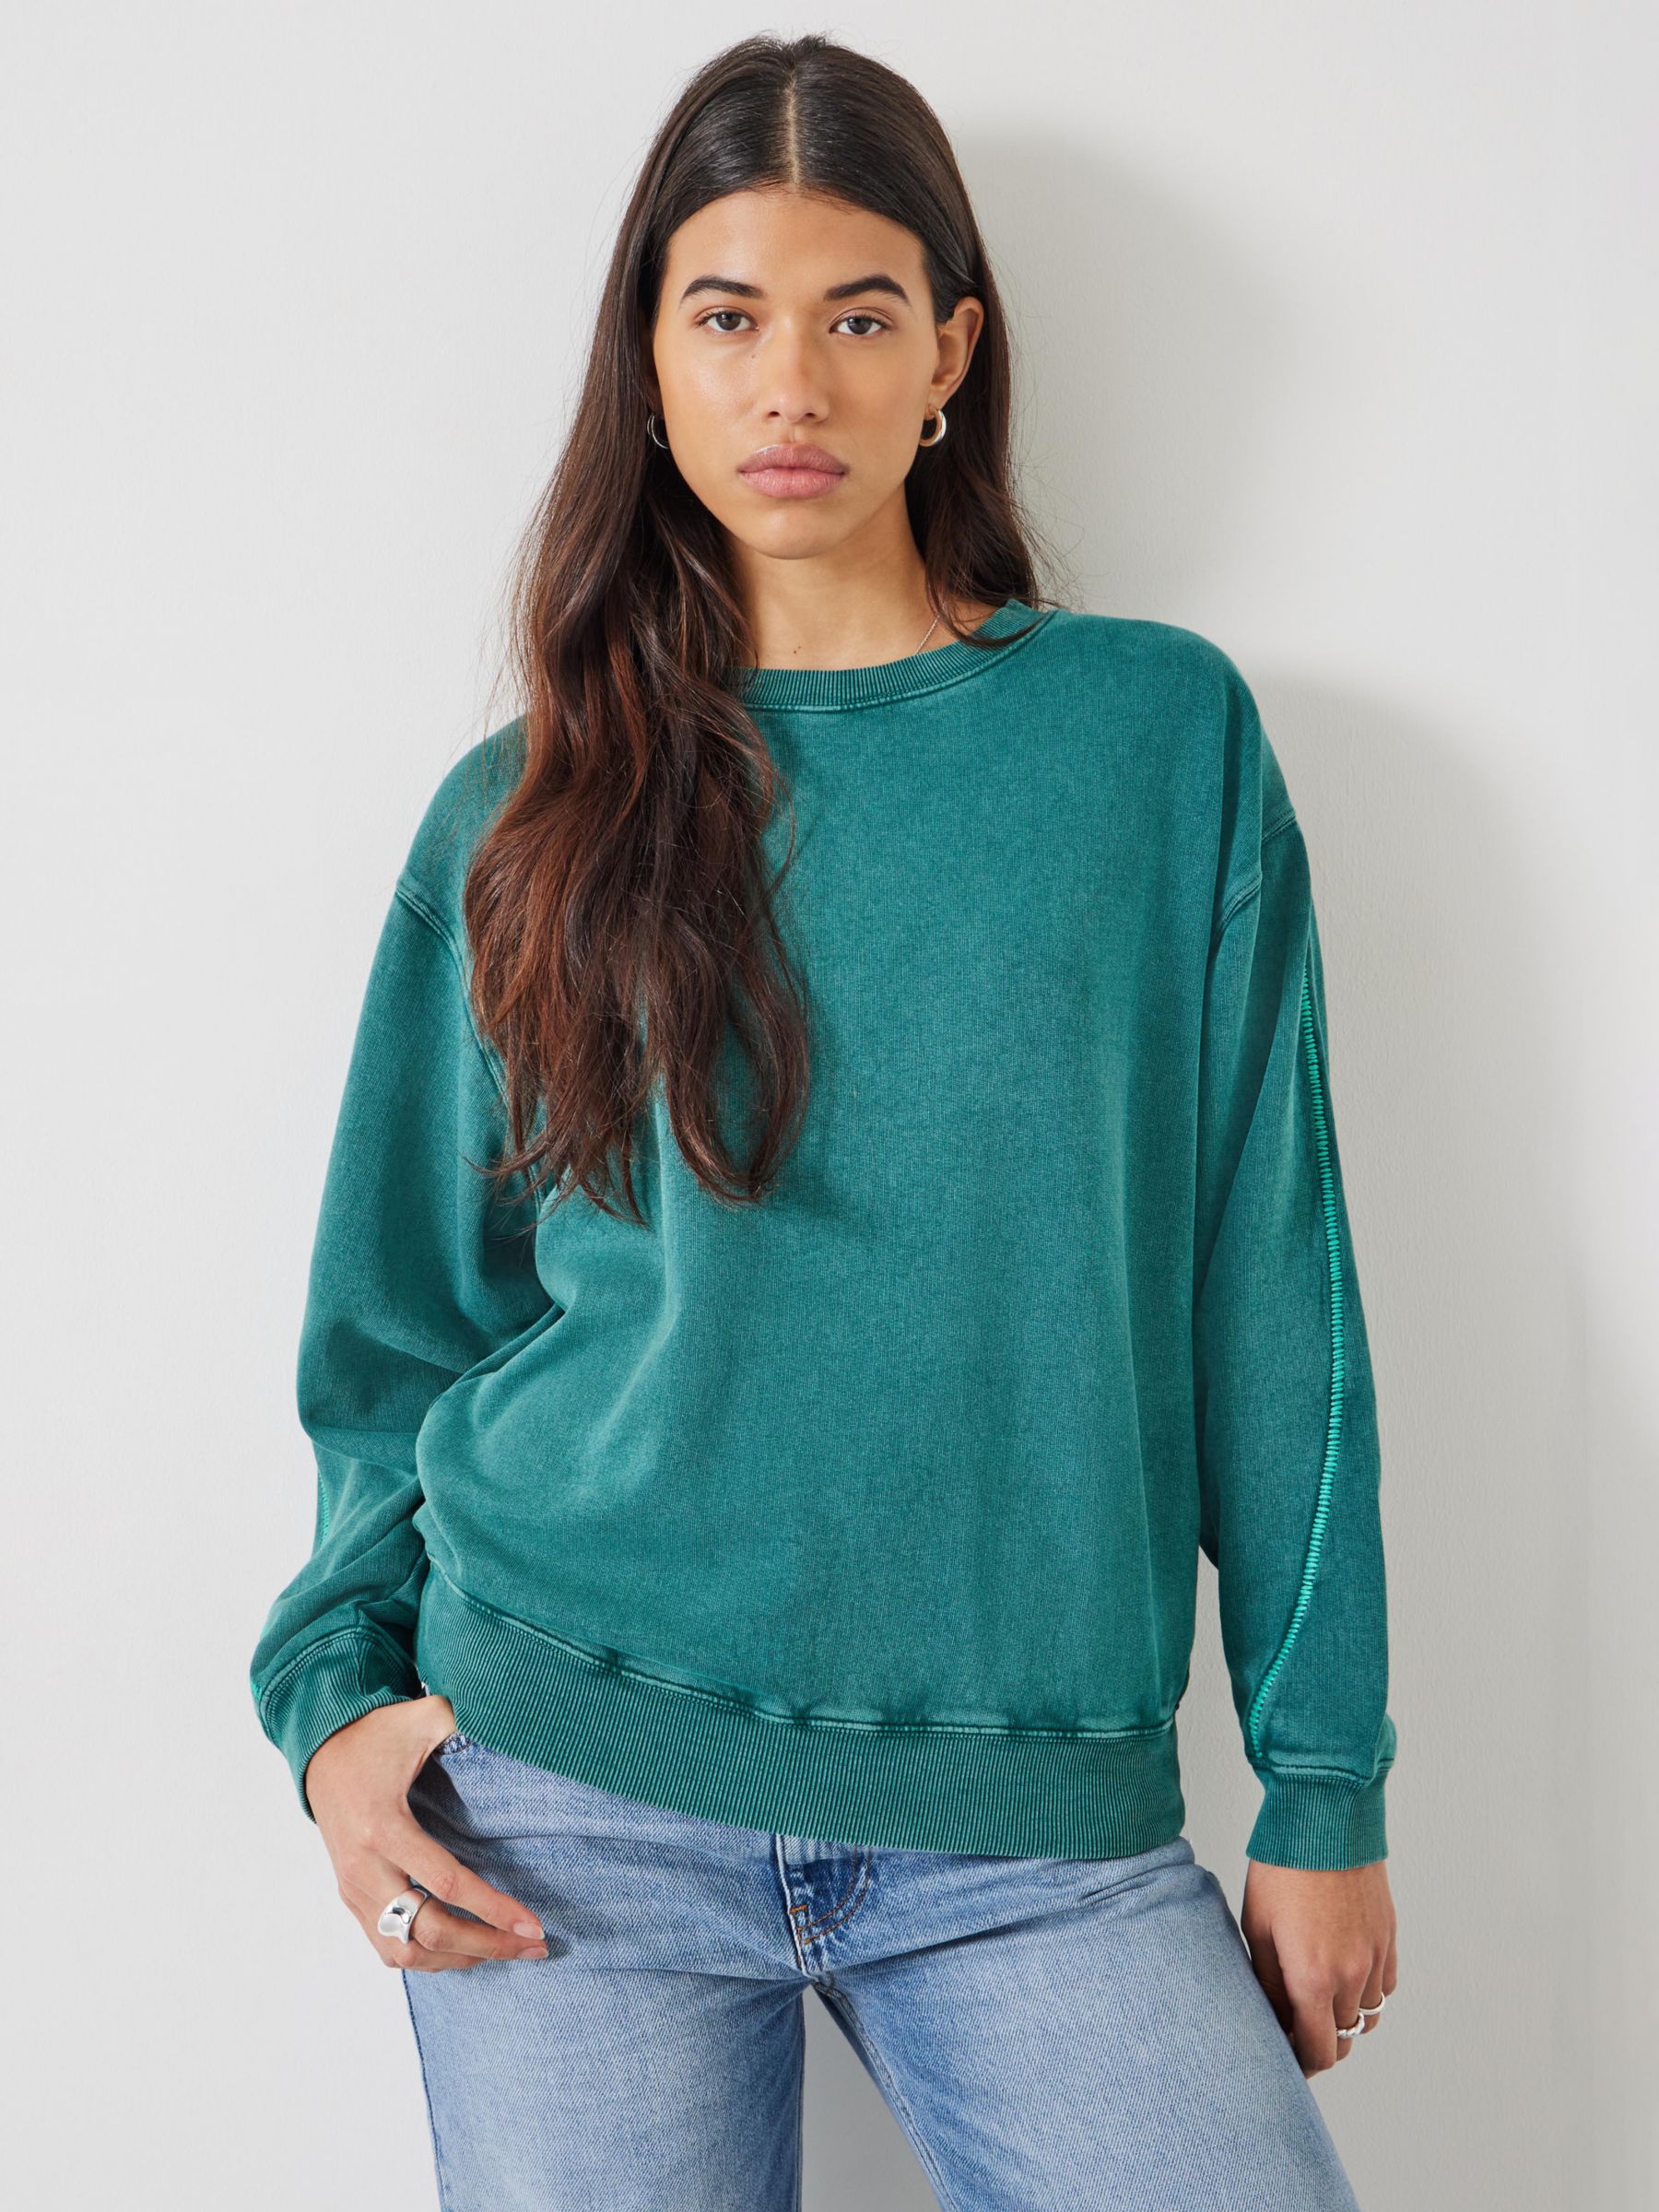 AQUA Contrast Stitch Sweater - 100% Exclusive